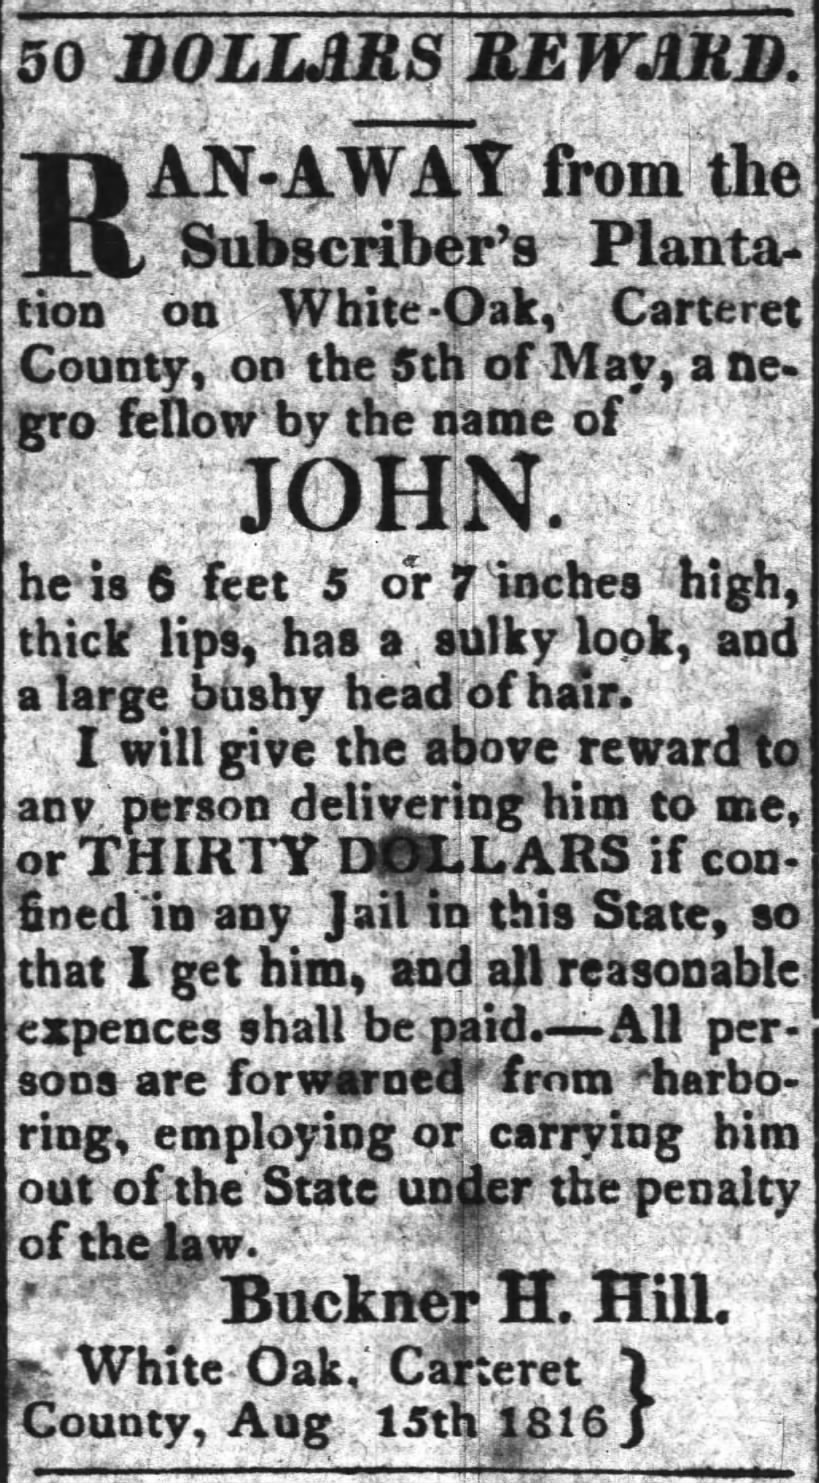 ADD Buckner Hill Slave named John Ran away from white oak plantation 14 Sep 1816